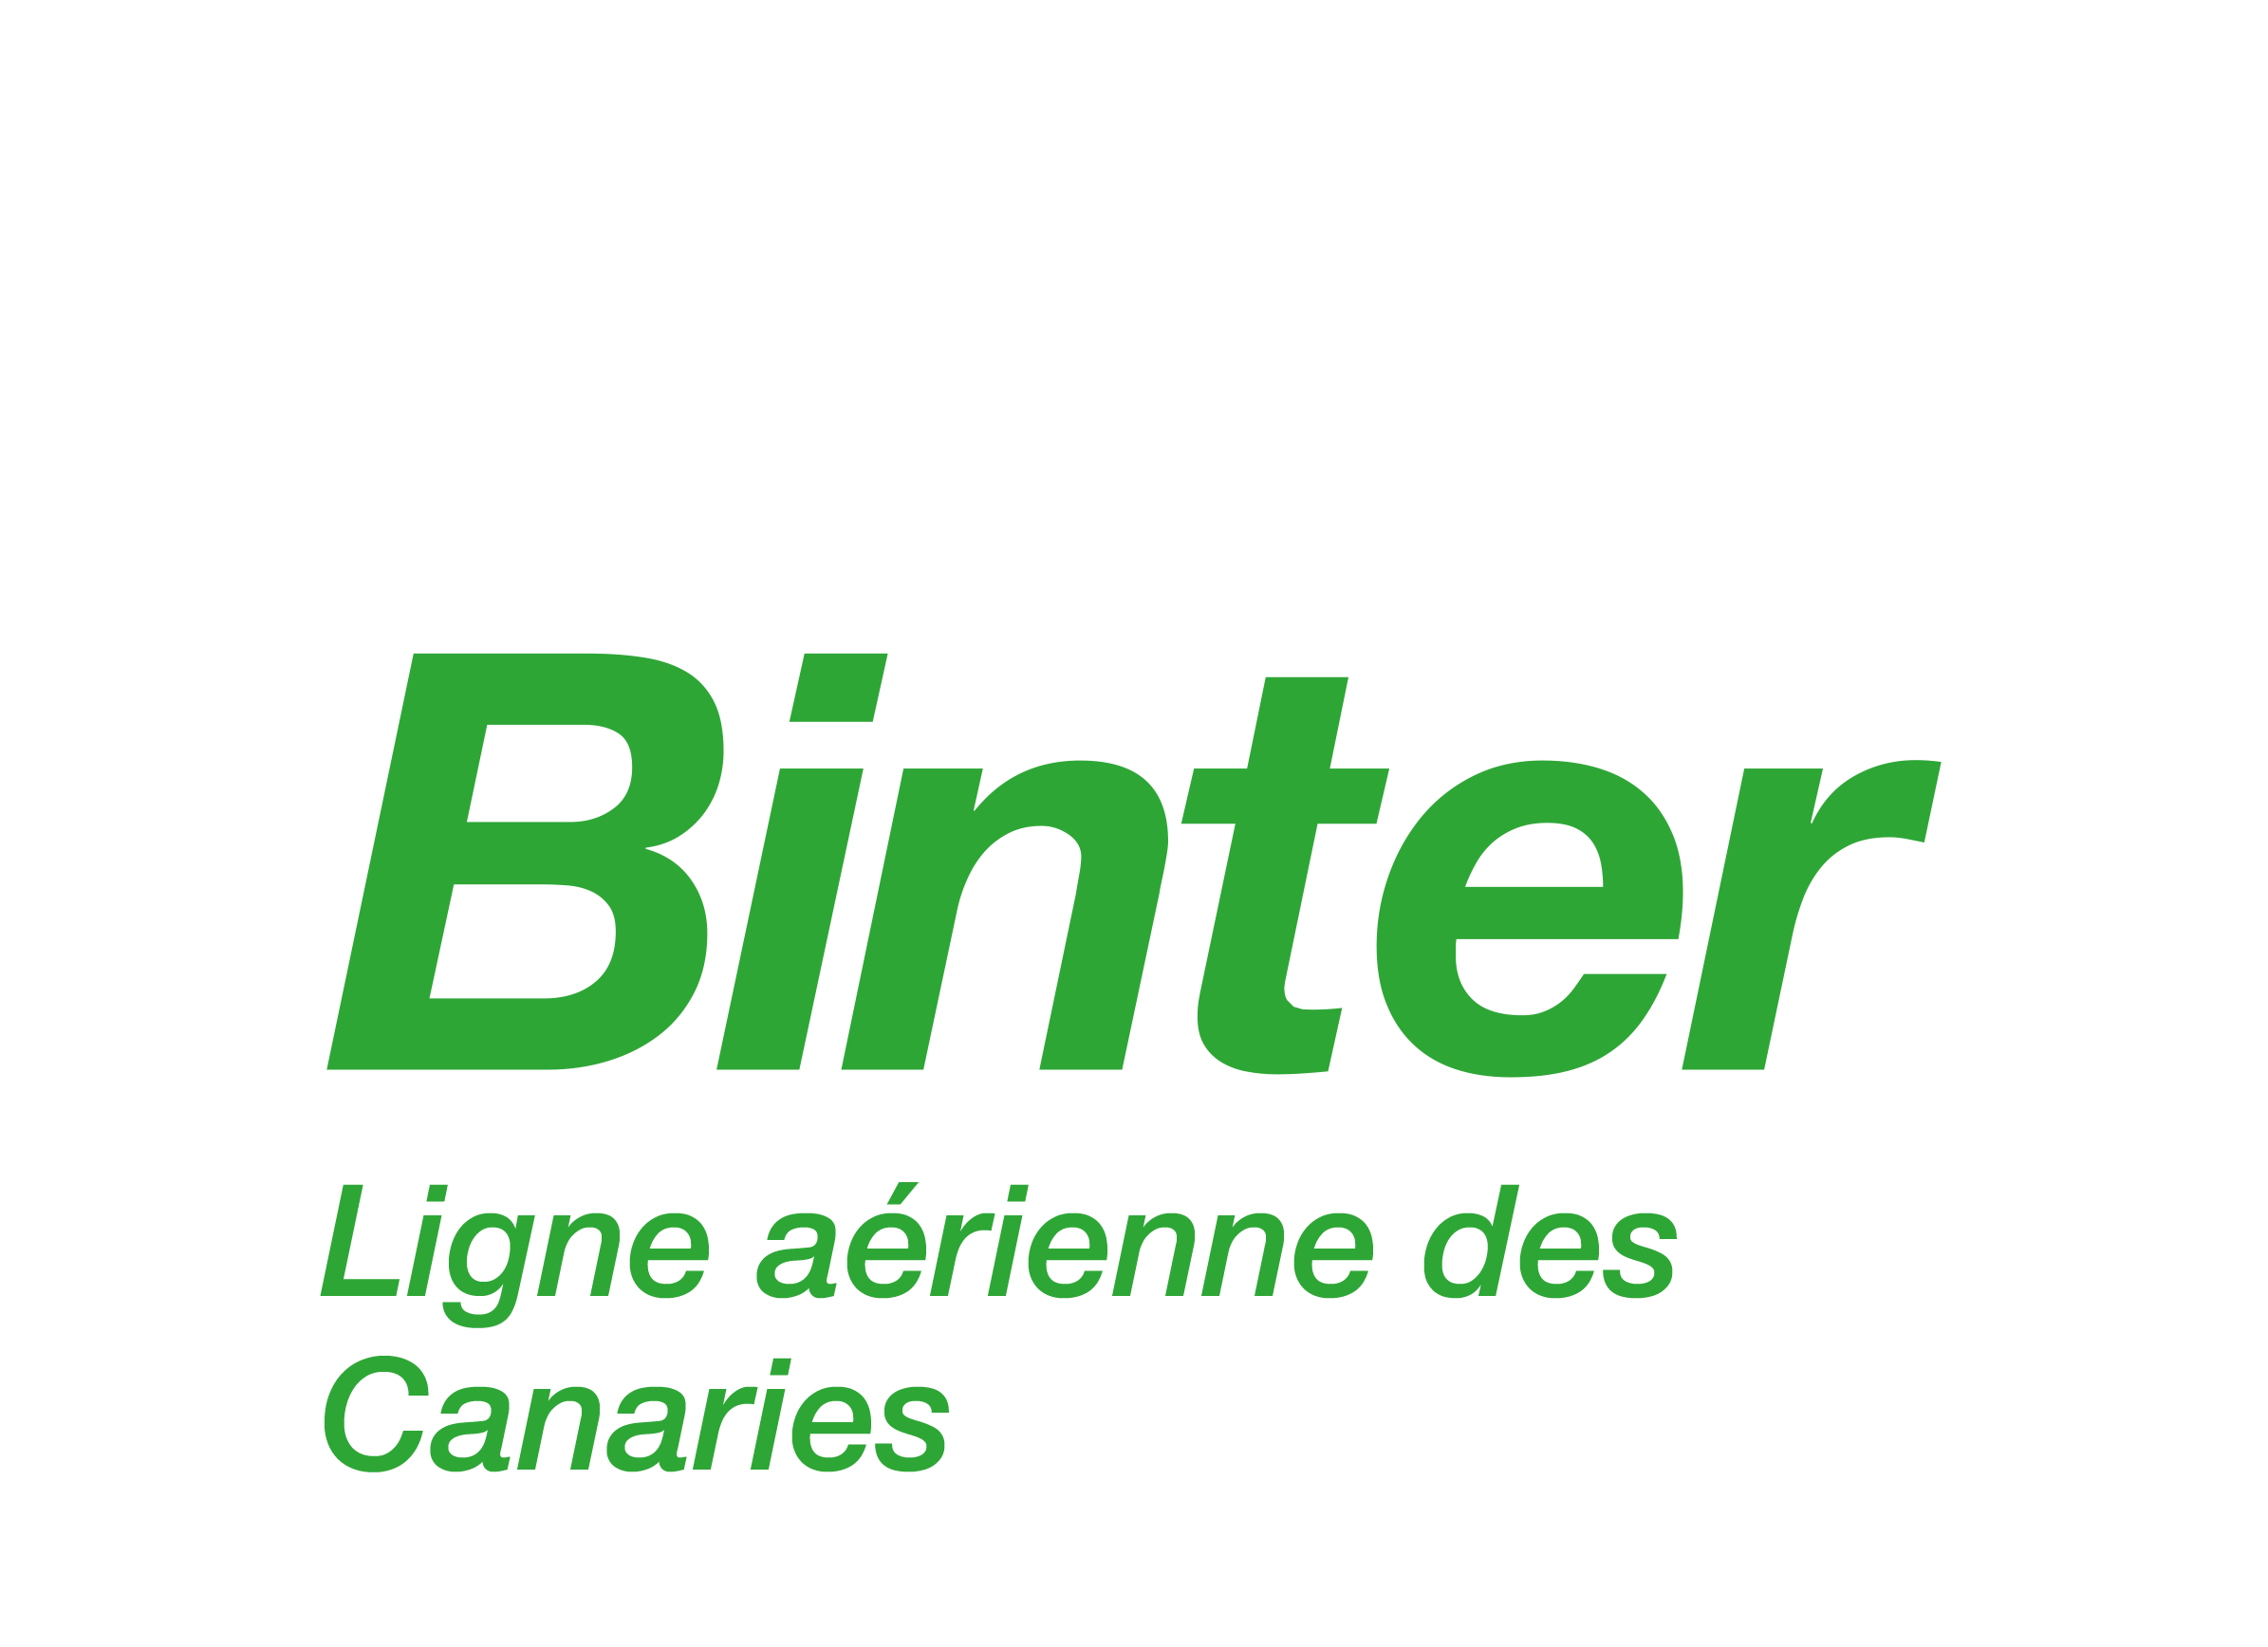 Logos Binter Logo verde sin fondo FR